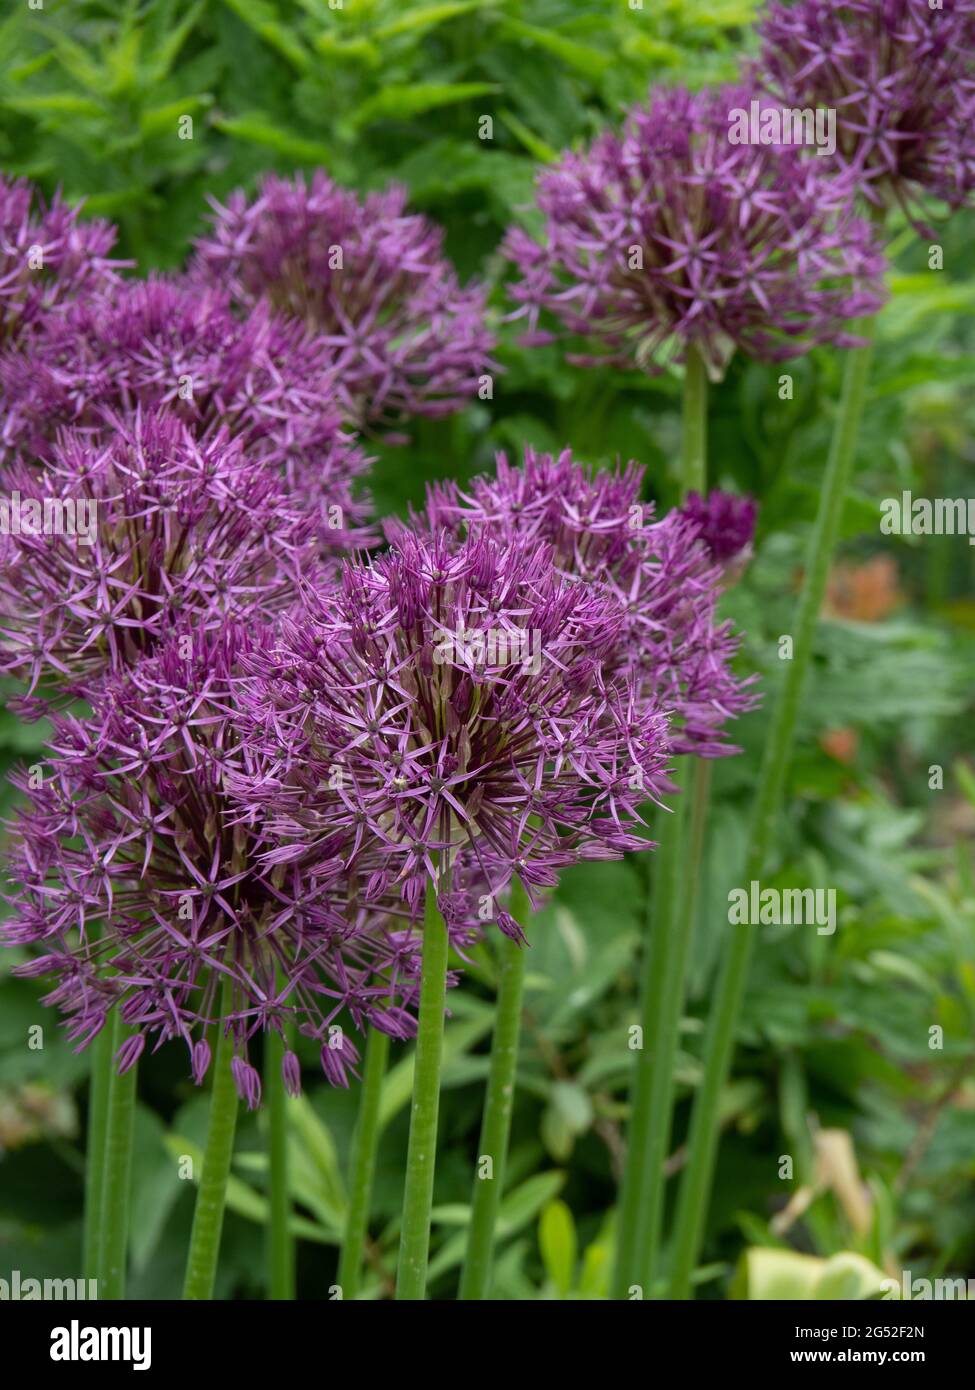 A group of the spherical purple flowerheads of the Allium Purple Rain Stock Photo